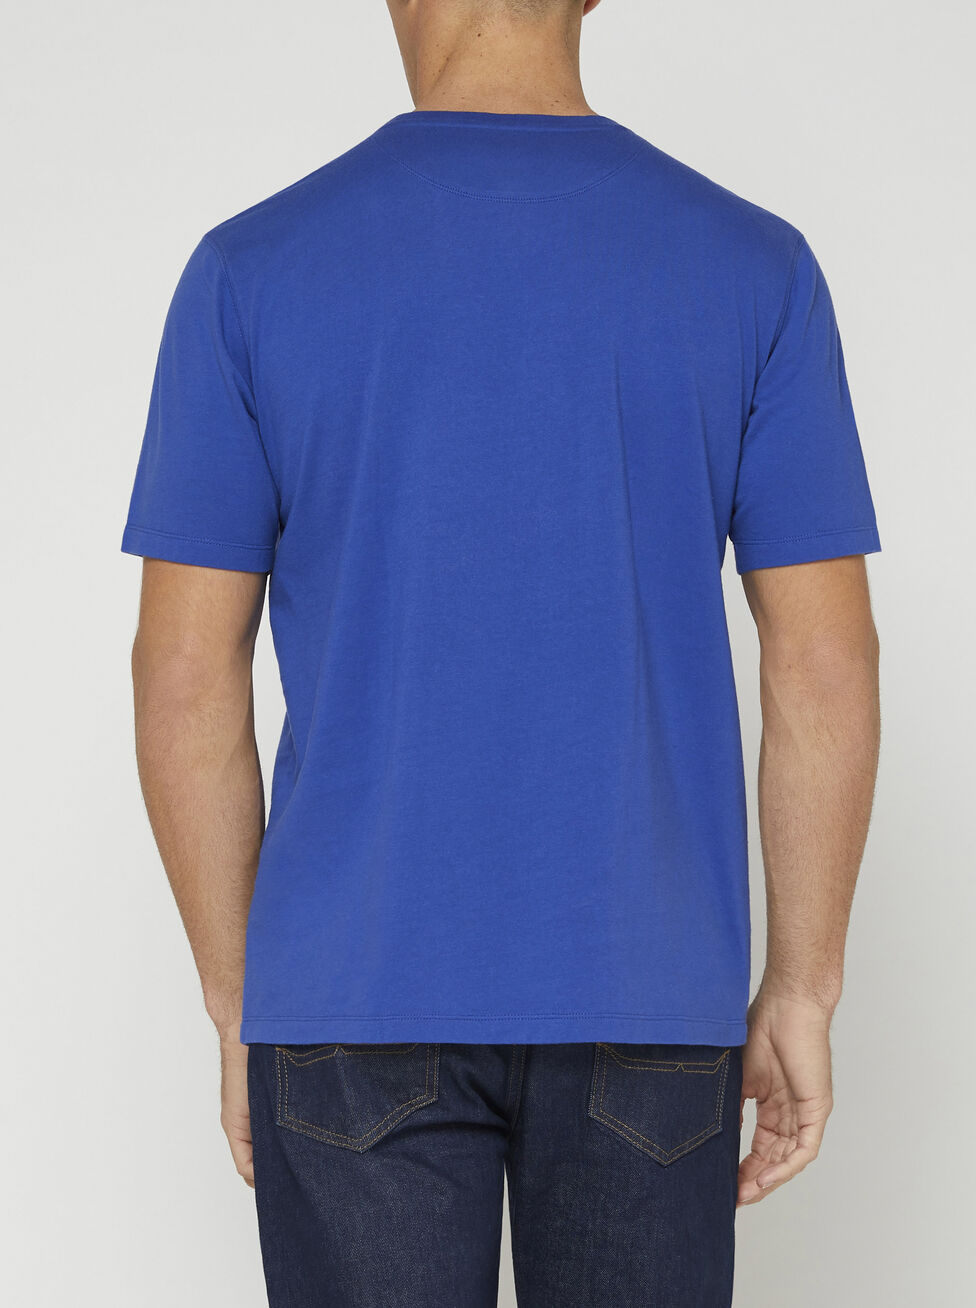 Parson T-Shirt SS20 - Men's T-Shirts at R.M.Williams®